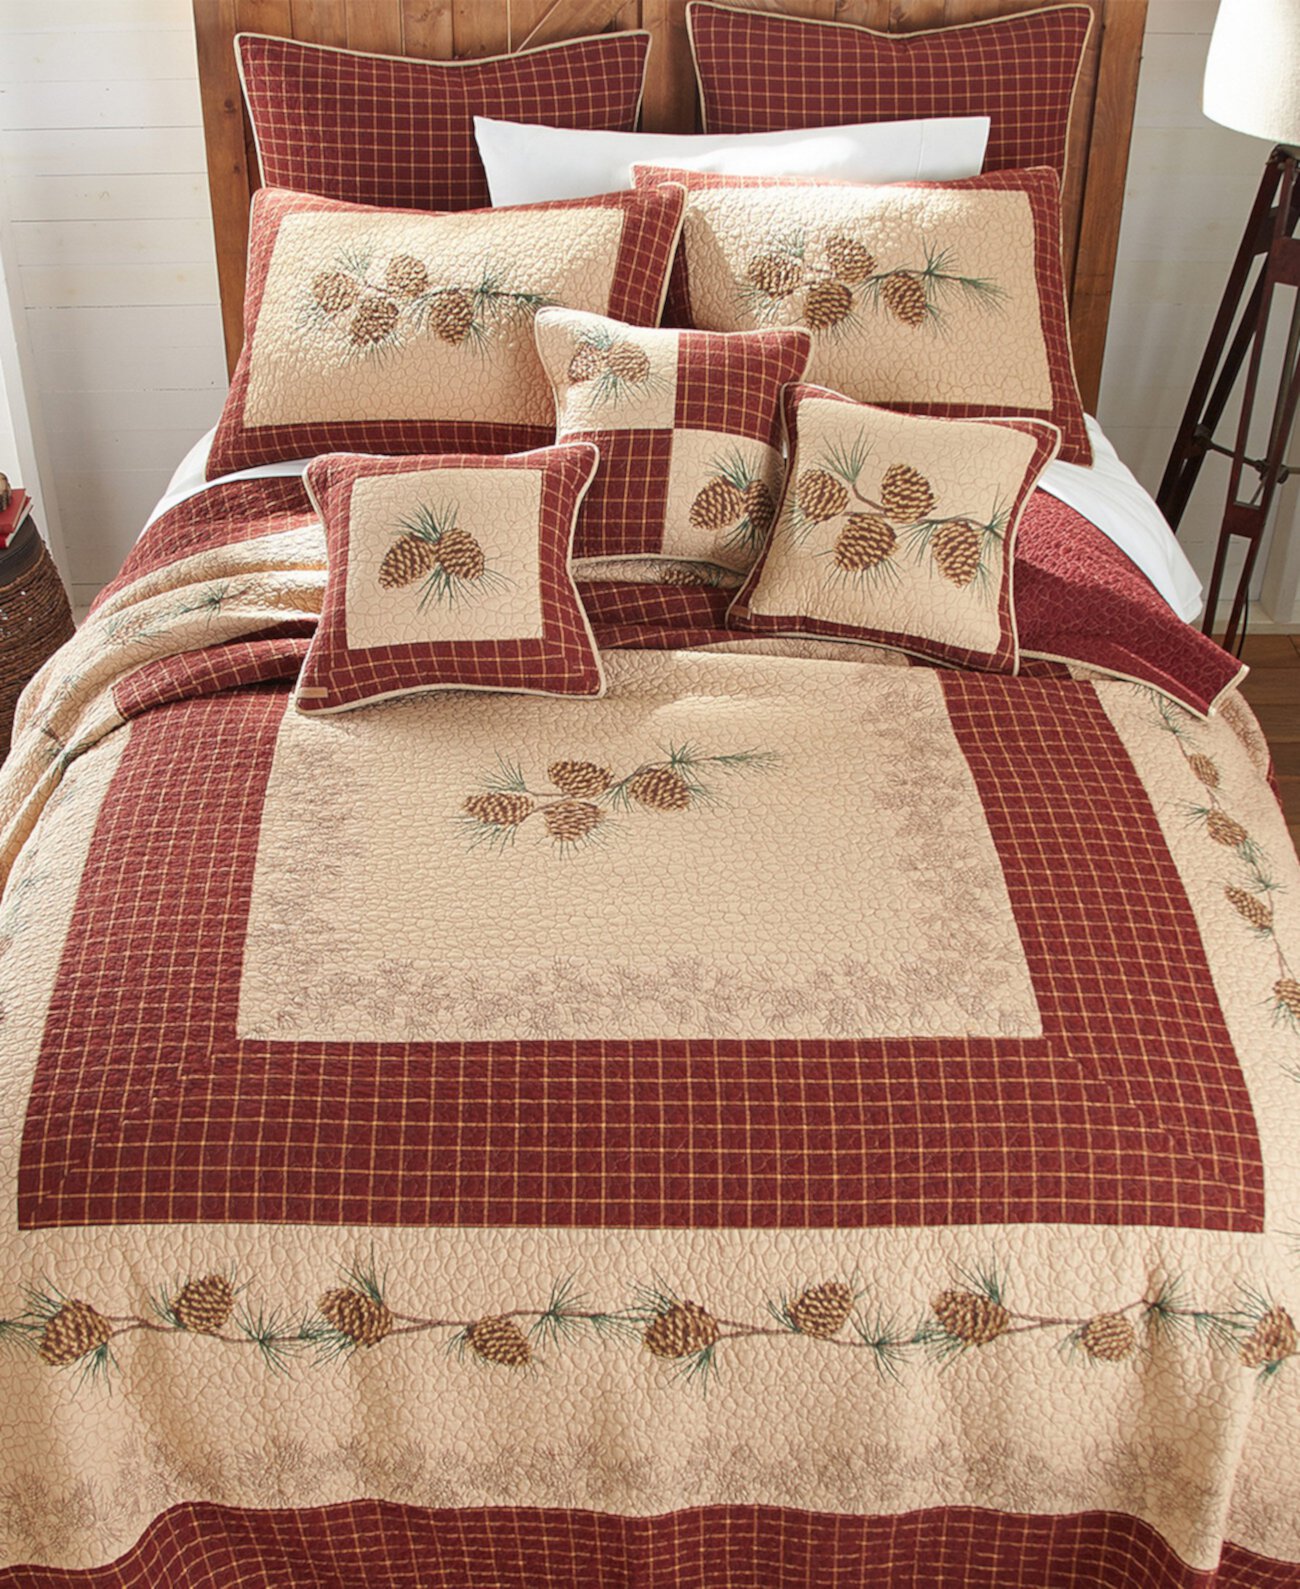 Коллекция хлопковых одеял Pine Lodge, аксессуары American Heritage Textiles